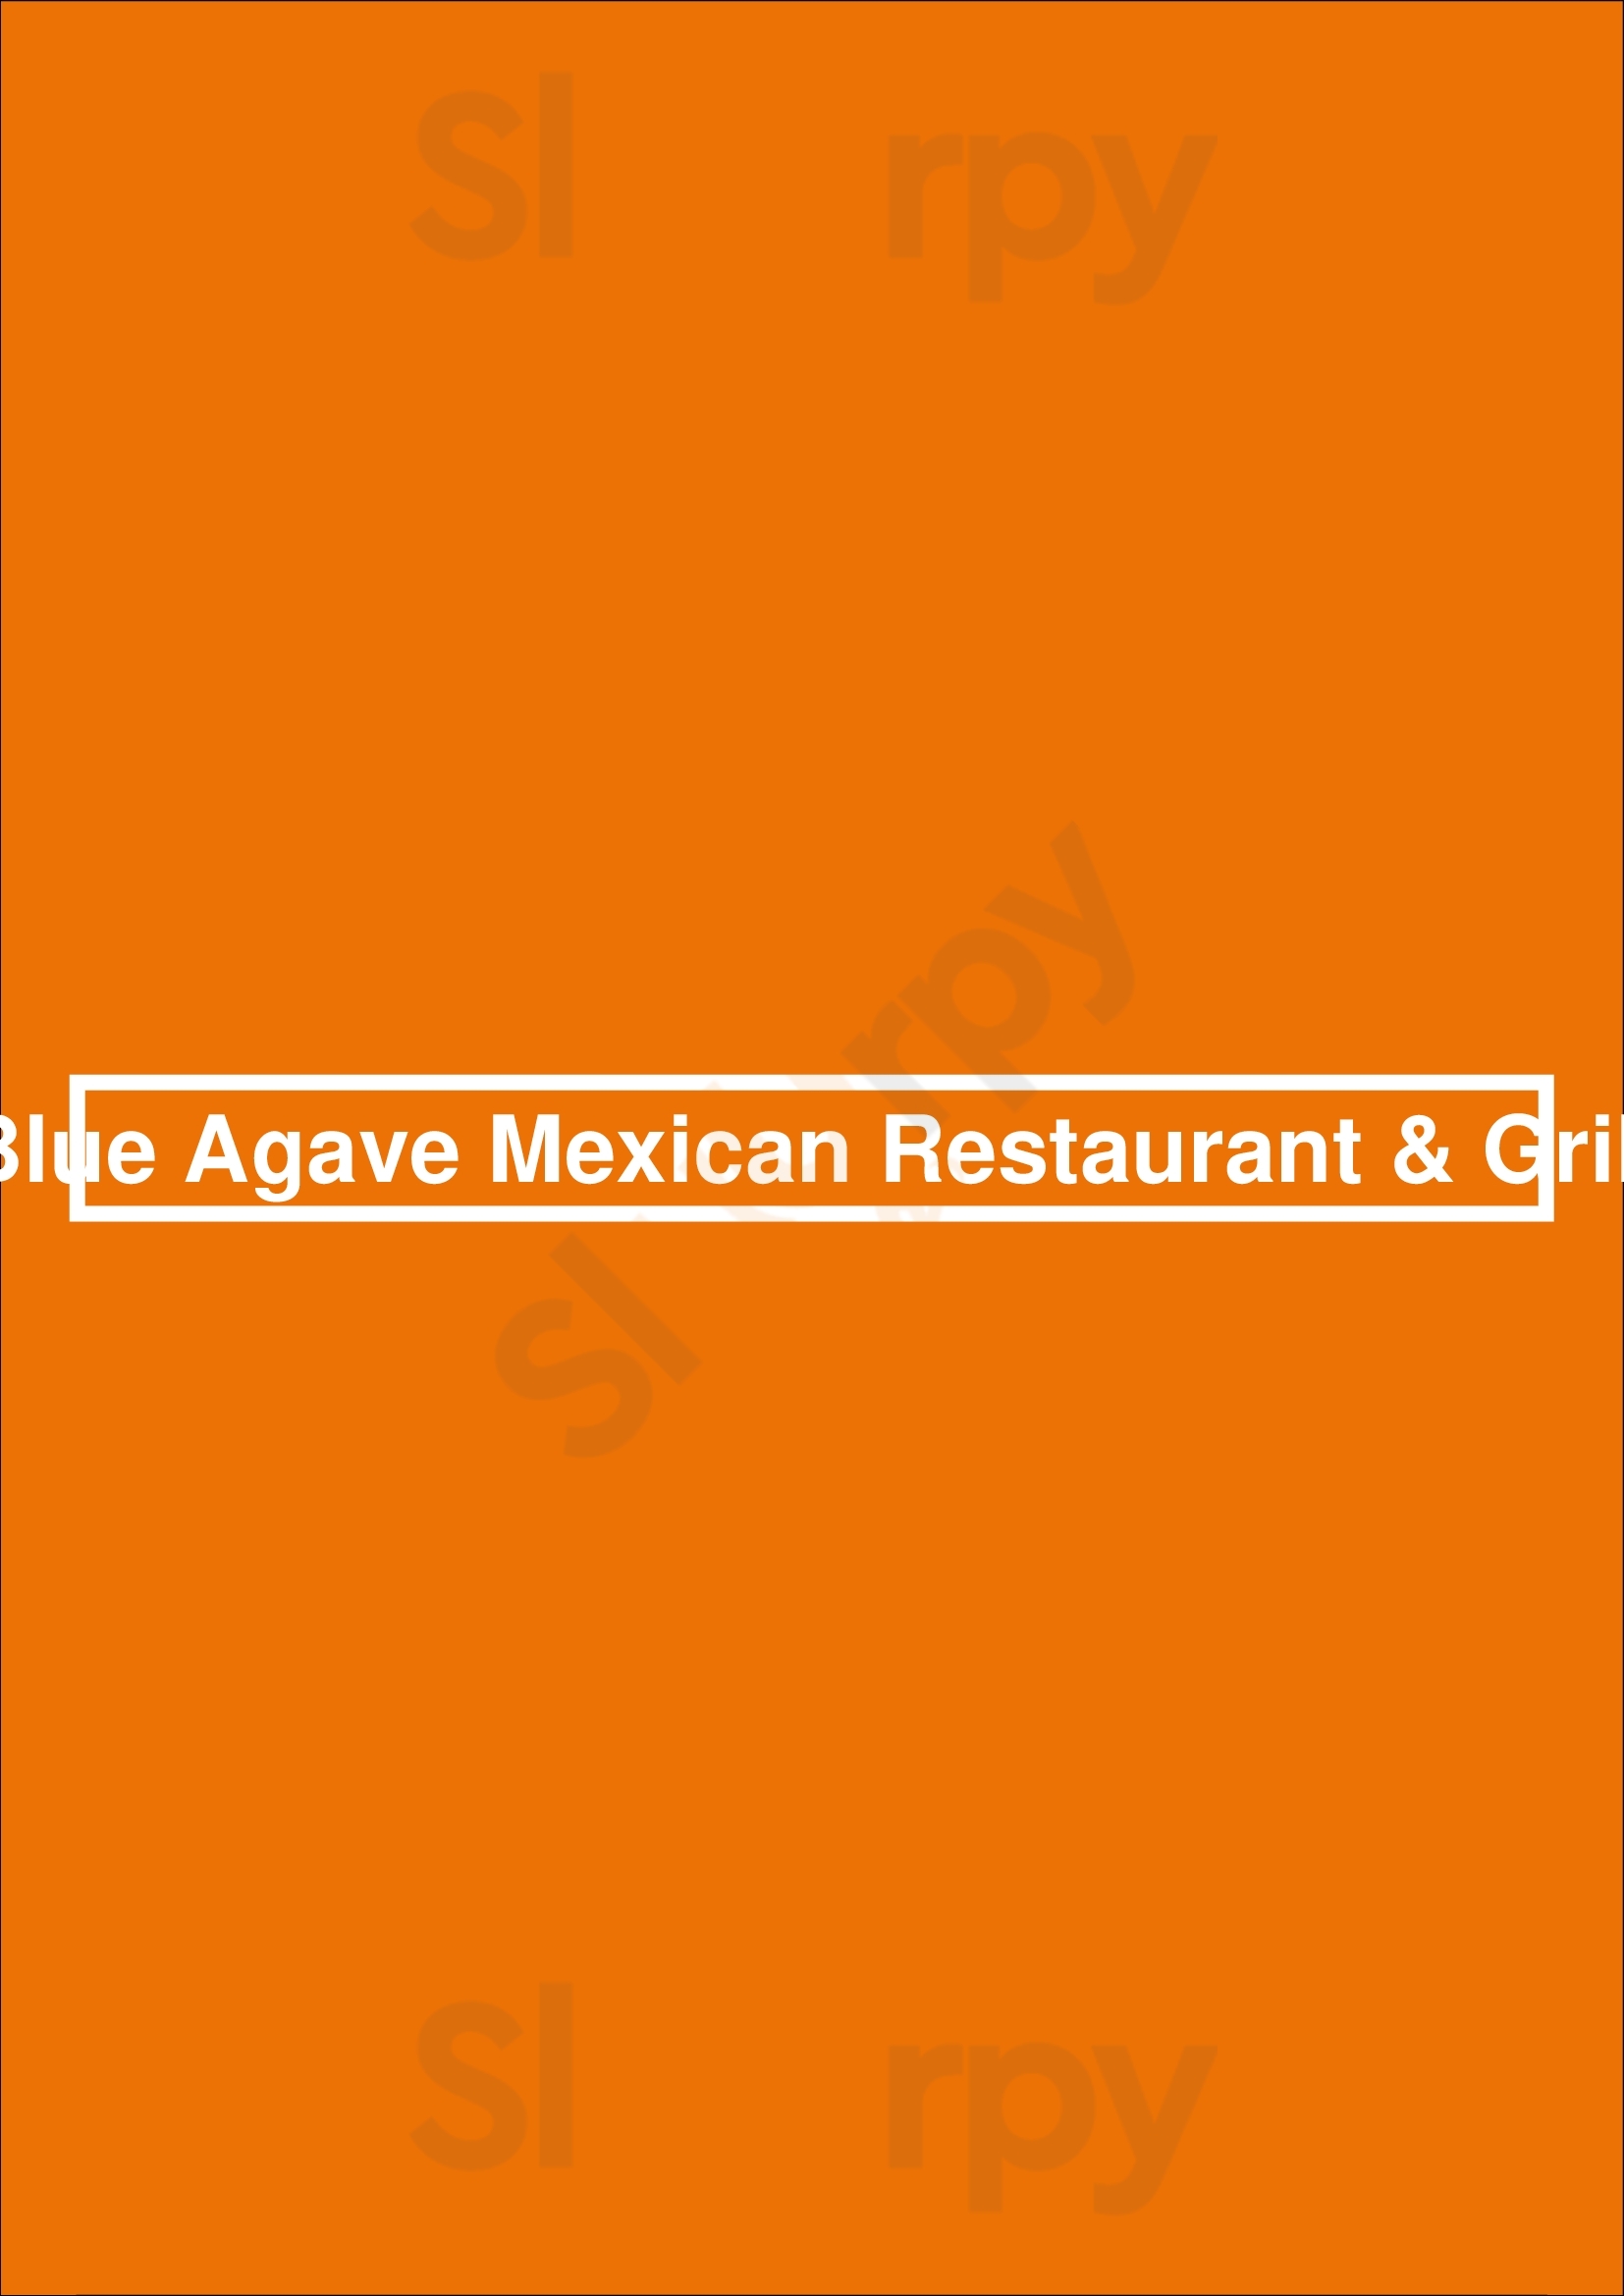 Blue Agave Mexican Restaurant & Grill Greensboro Menu - 1